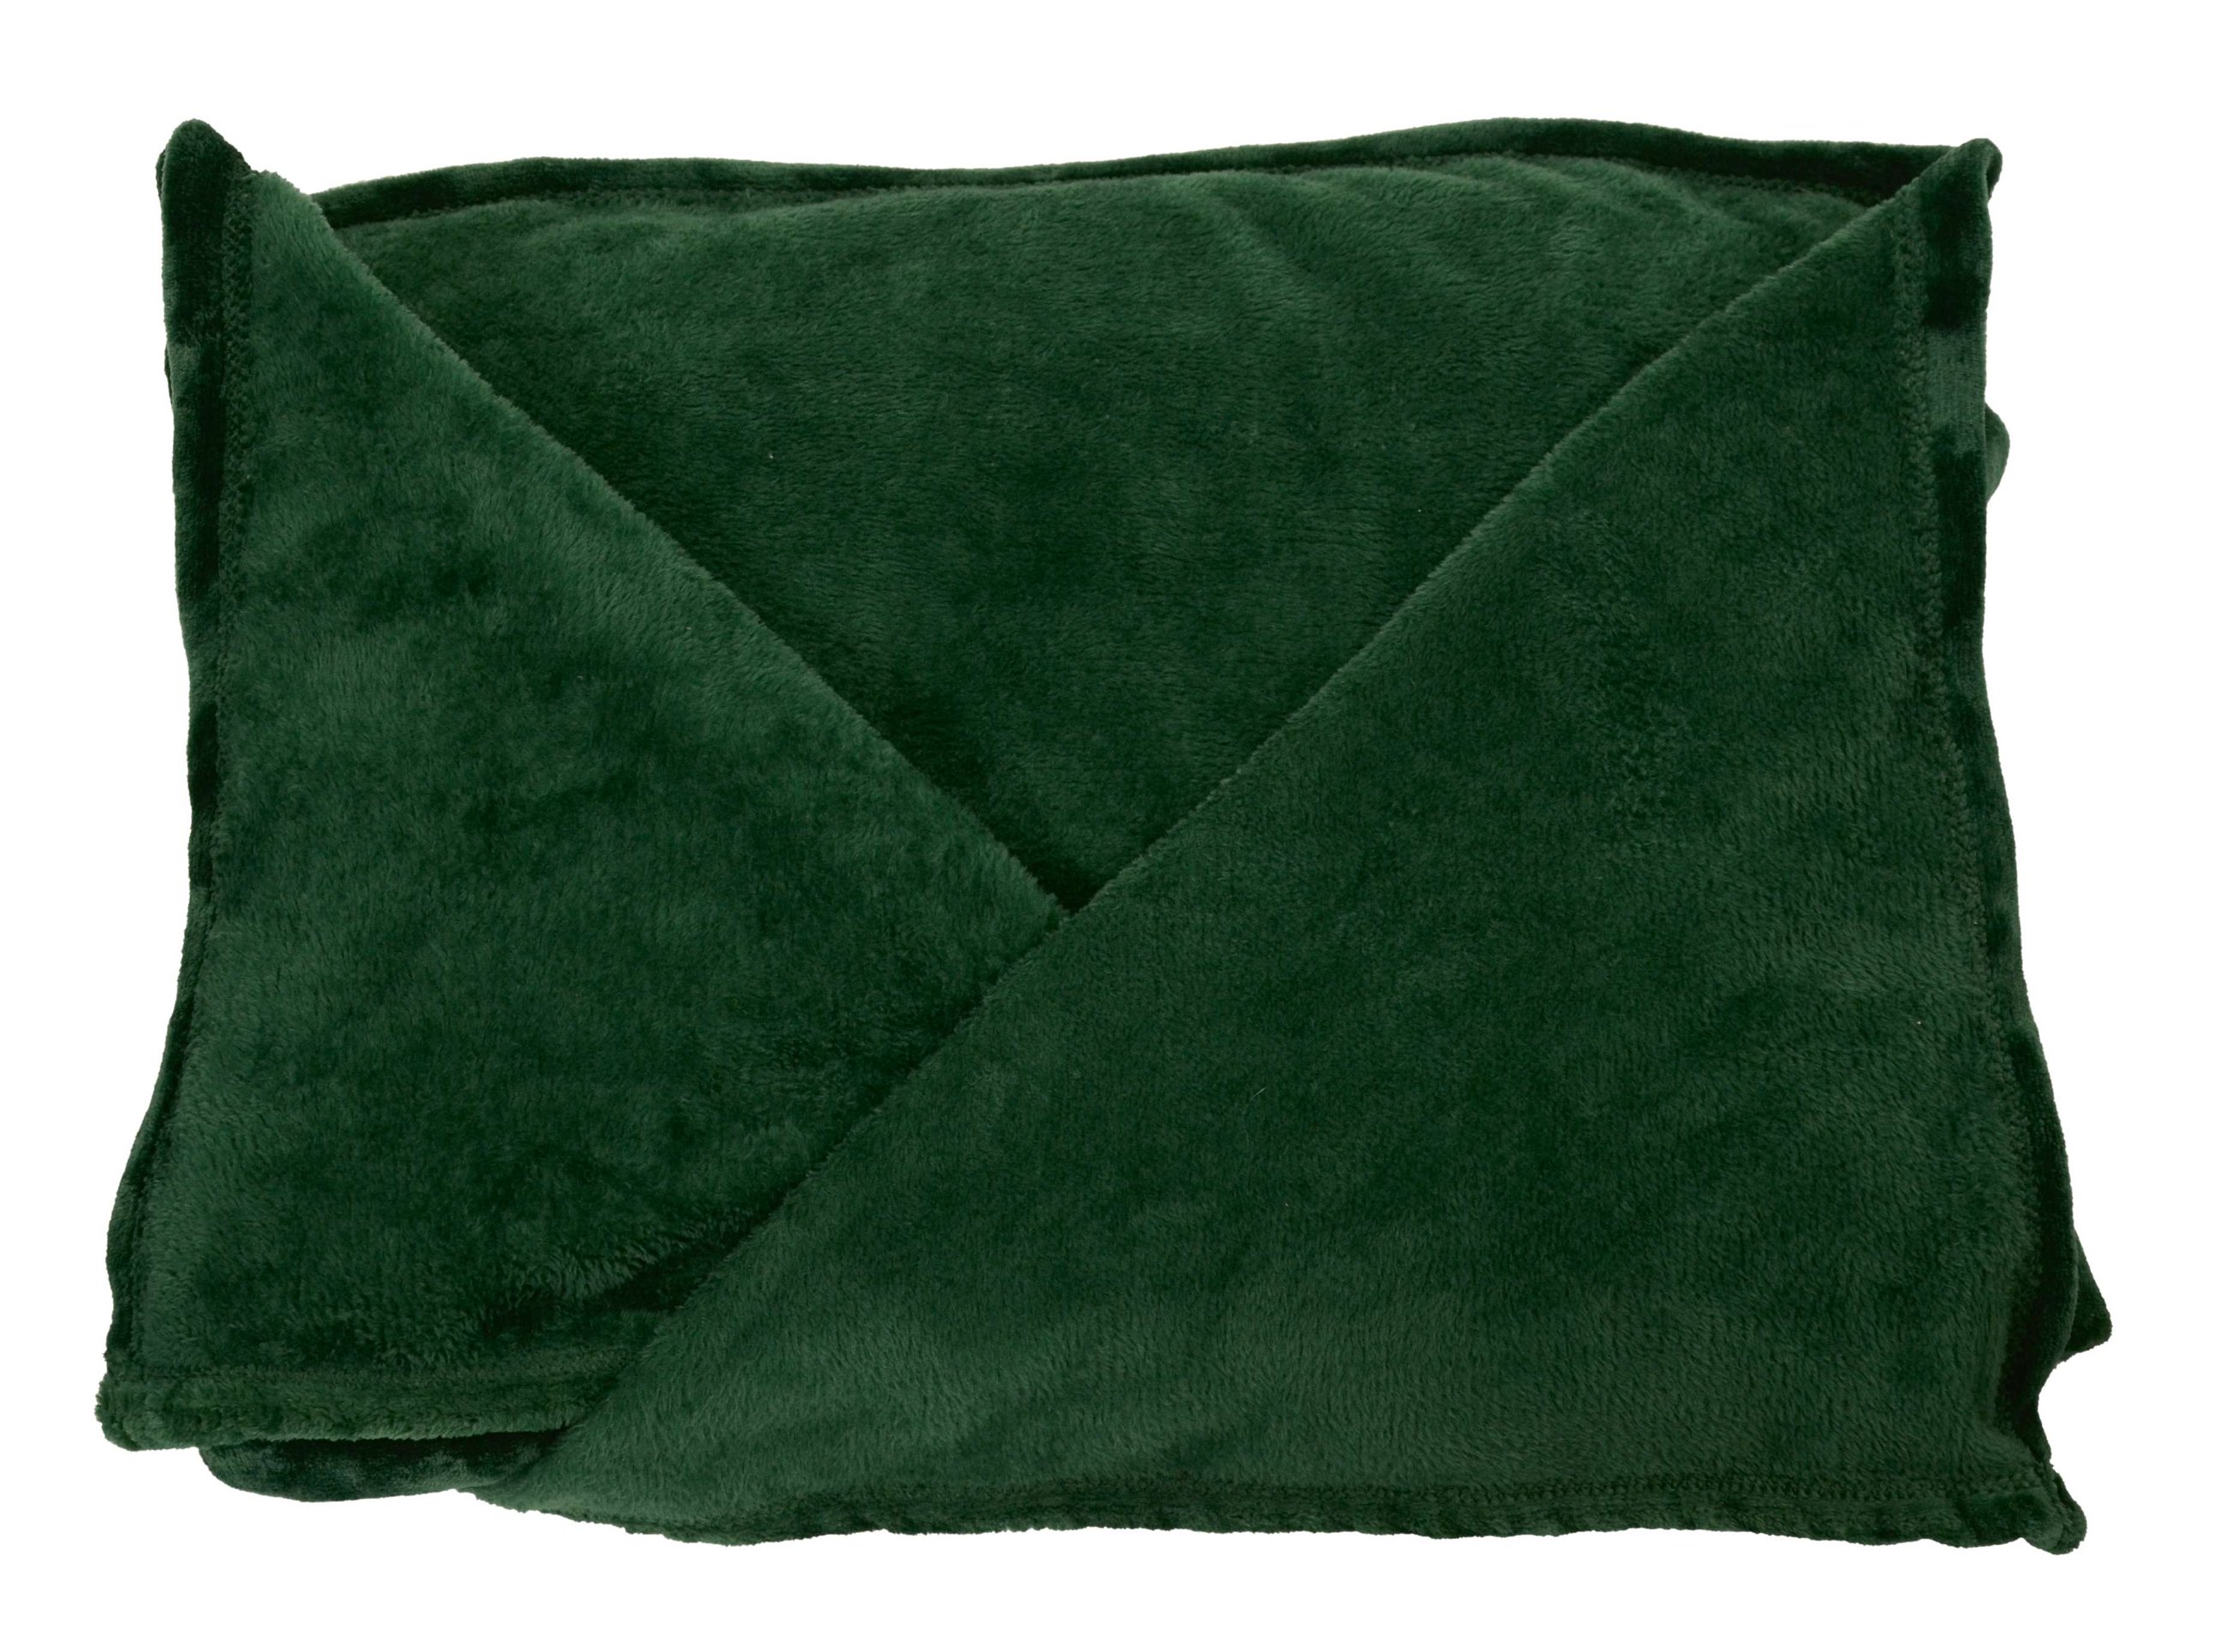 Coperta in pile con maniche XL verdi 170x200cm